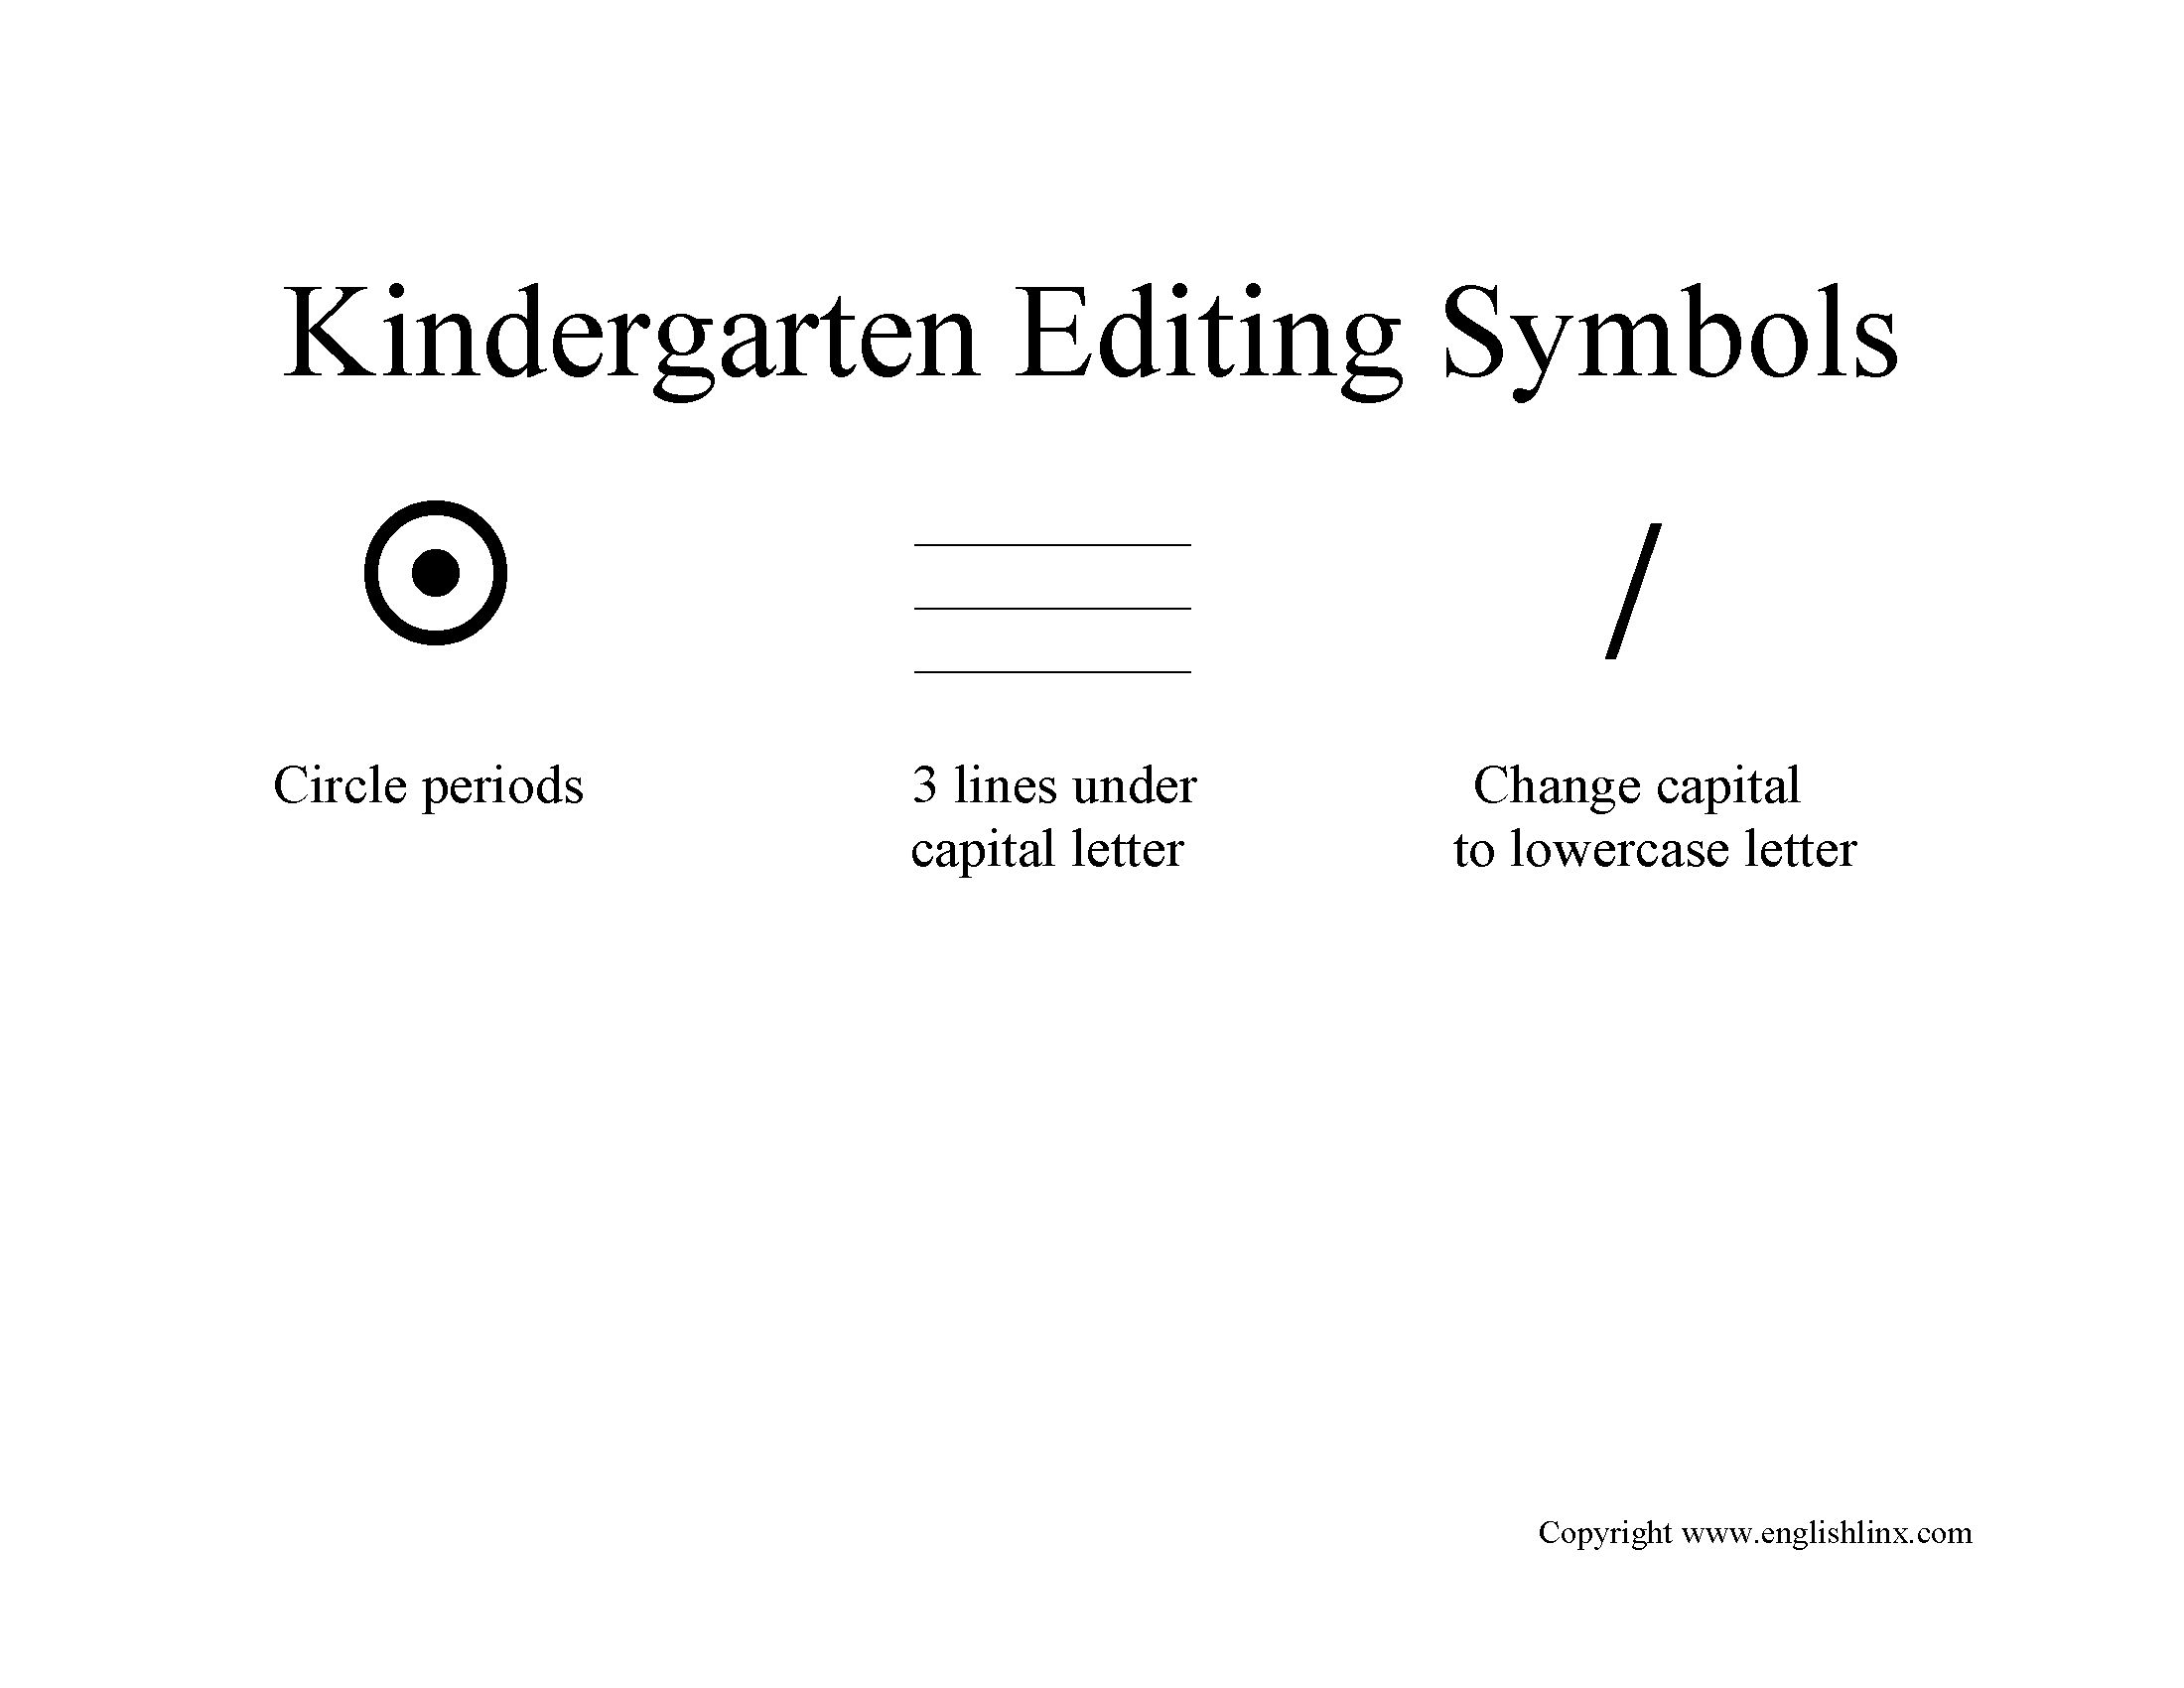 K-5 Editing Symbols Worksheet